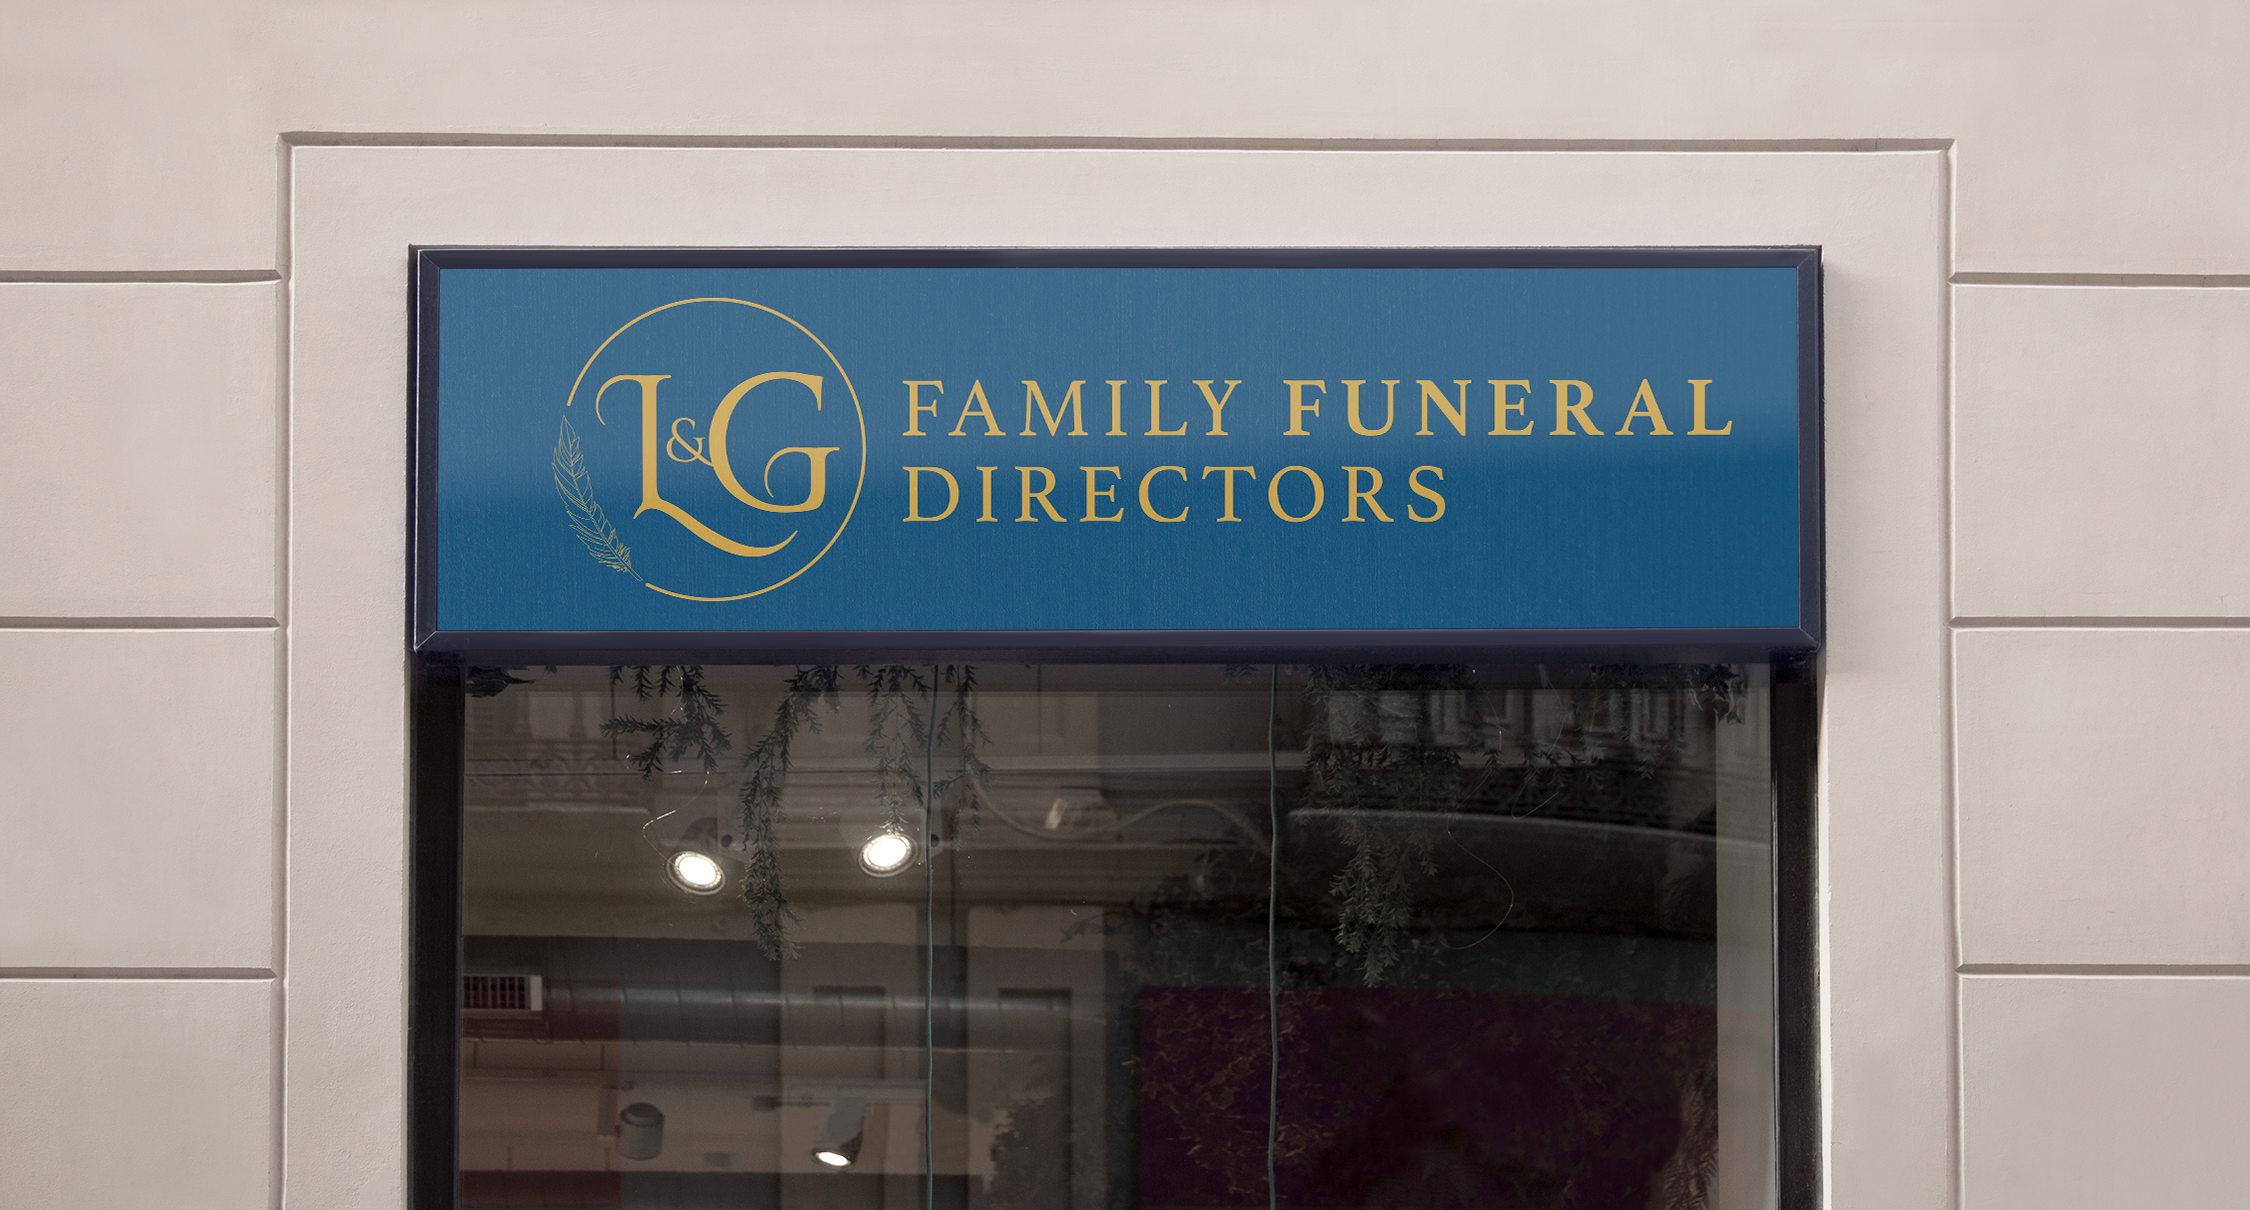 Funeral directors signage design newcastle